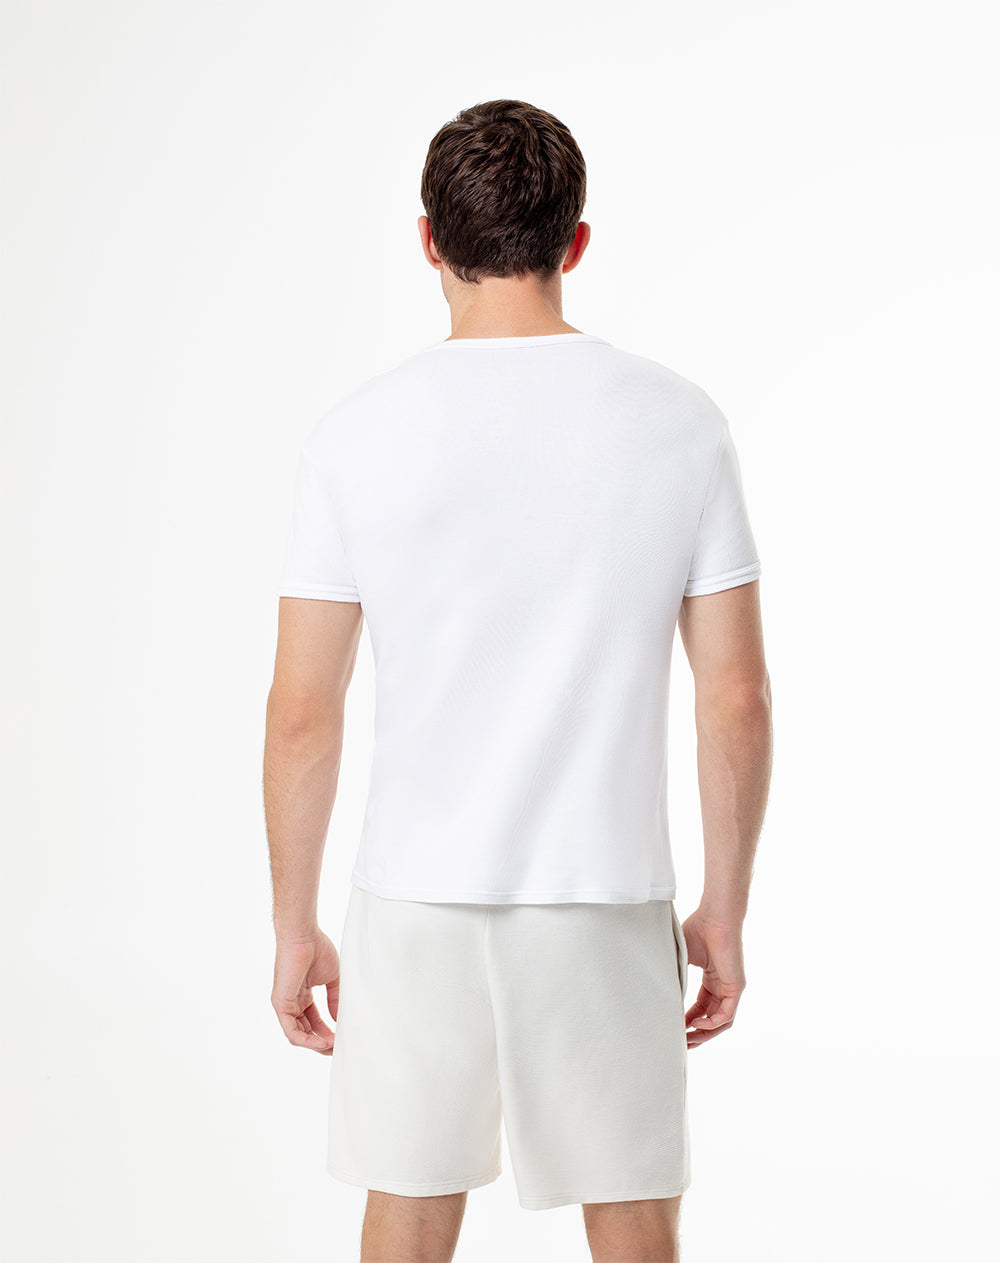 2 camisetas slim fit manga corta blanca